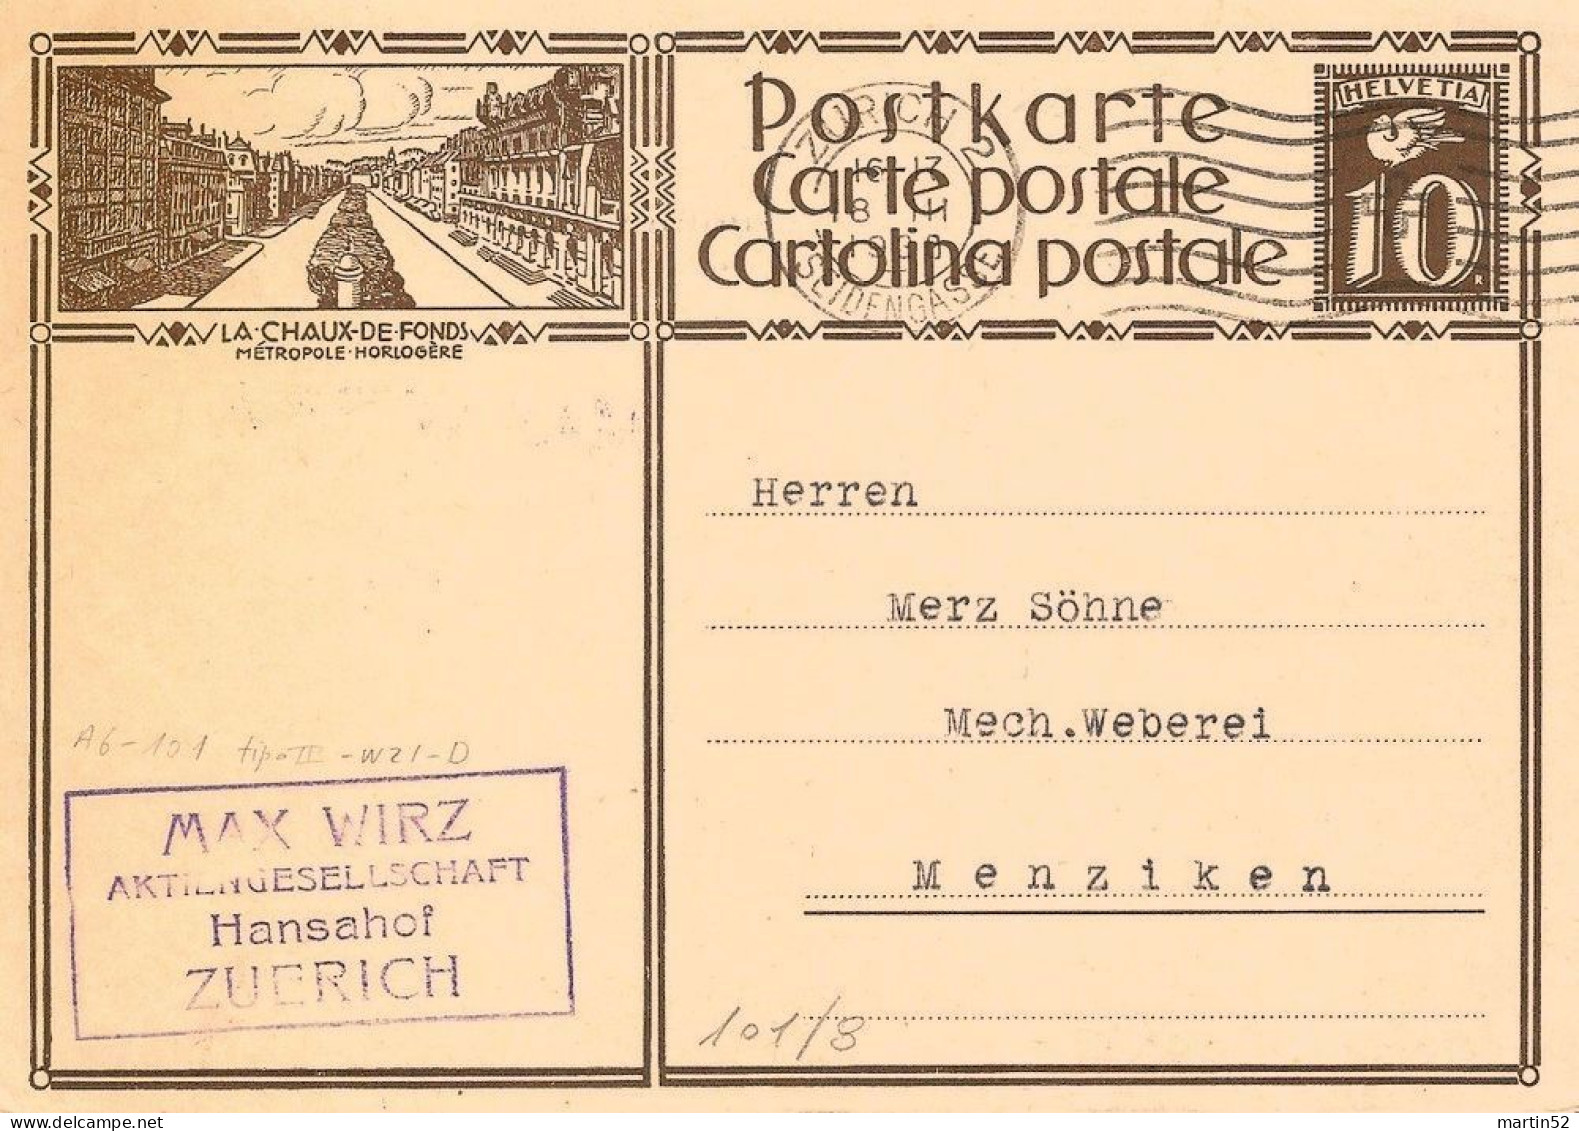 Schweiz Suisse 1930: Bild-PK CPI  LA CHAUX-DE-FONDS MÉTROPOLE HORLOGÈRE Mit Stempel ZÜRICH 18.III.1930 - Orologeria